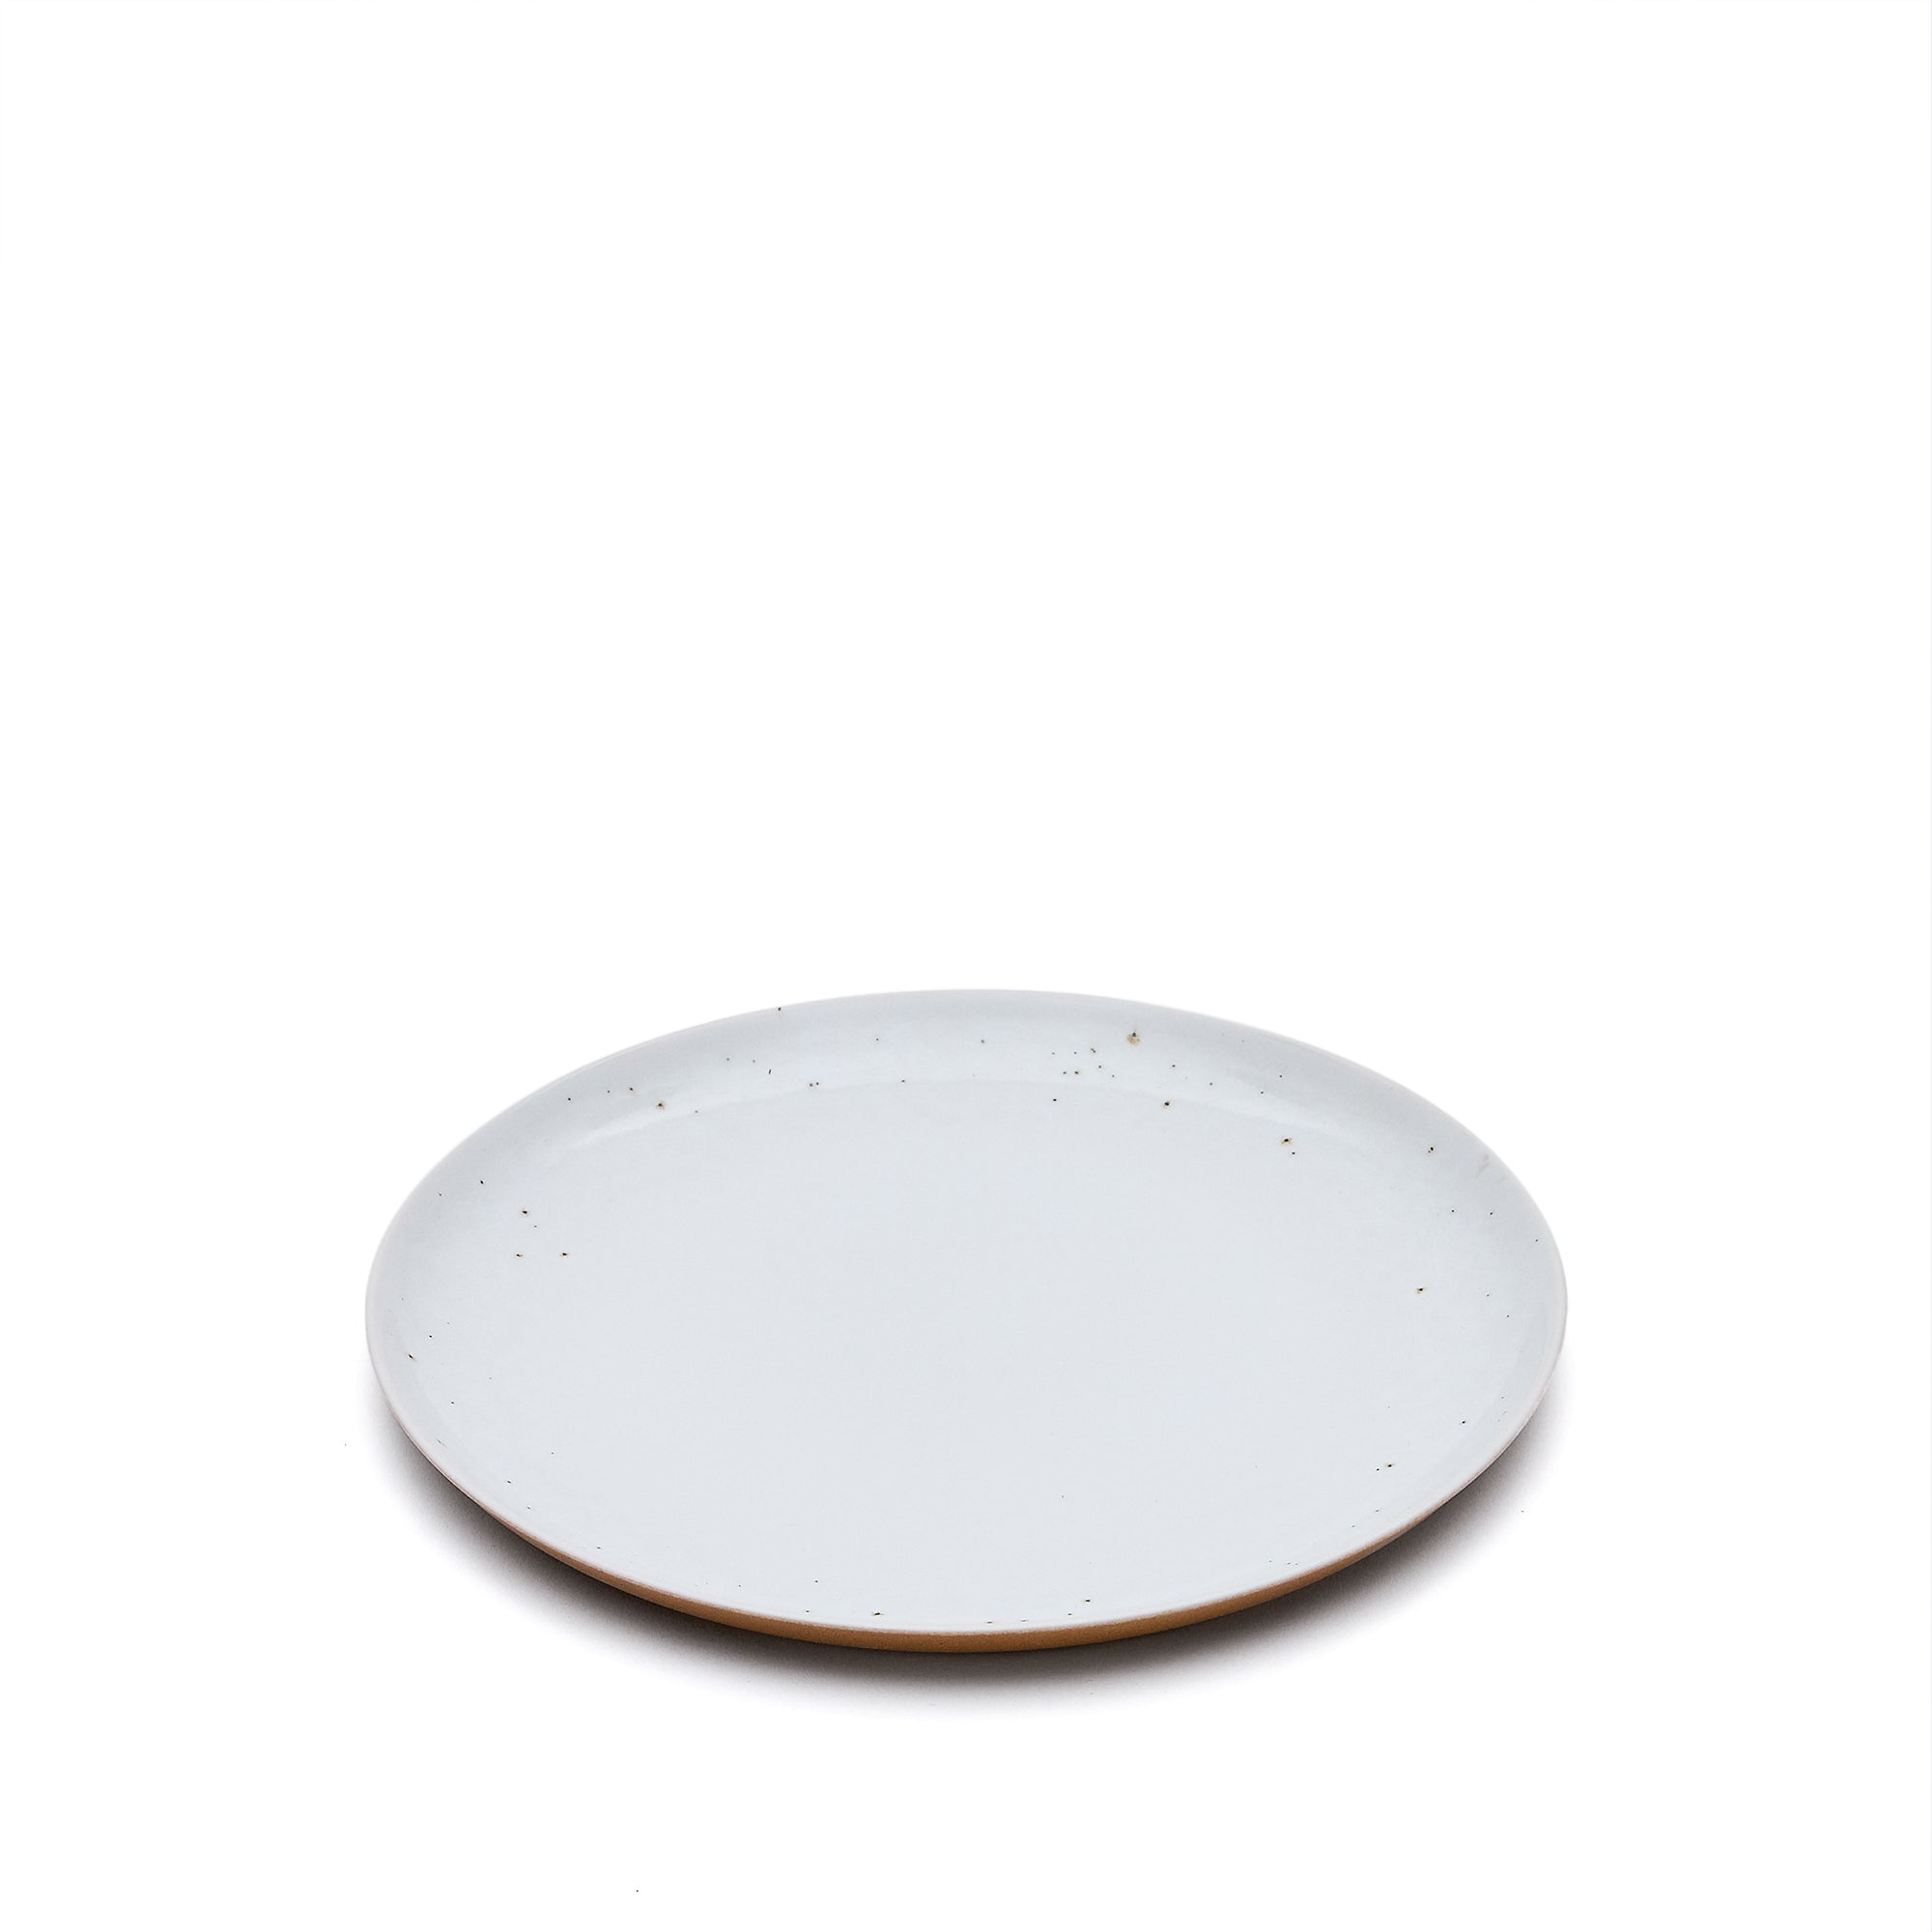 Publia white ceramic dinner plate